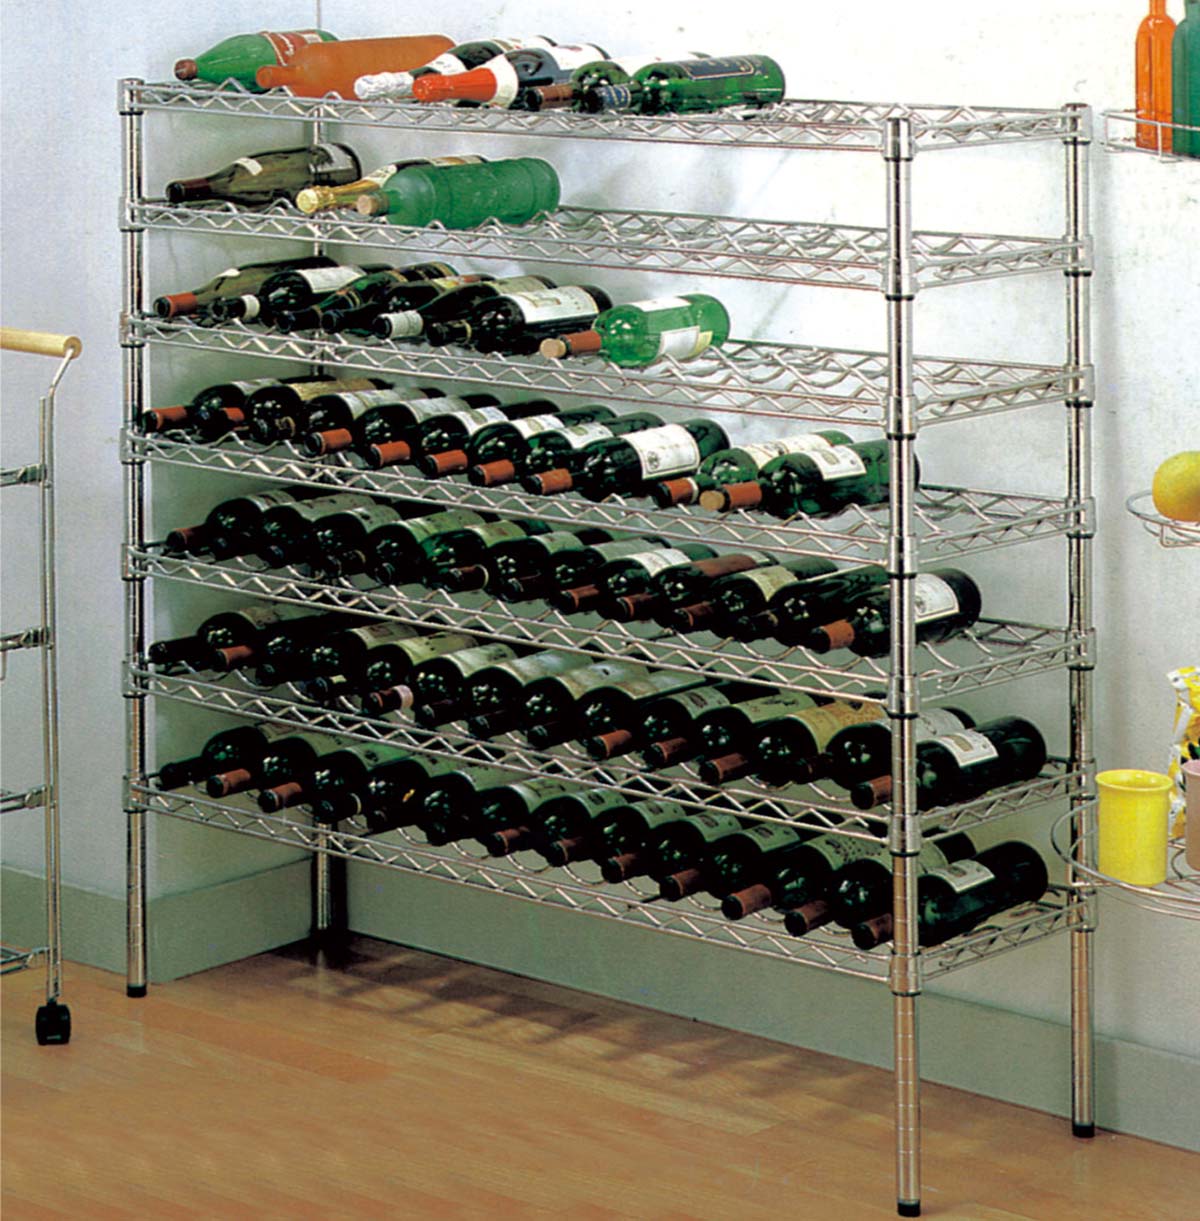 Metal Wire Rack Freestanding Floor Bar Storage & Display Shelf